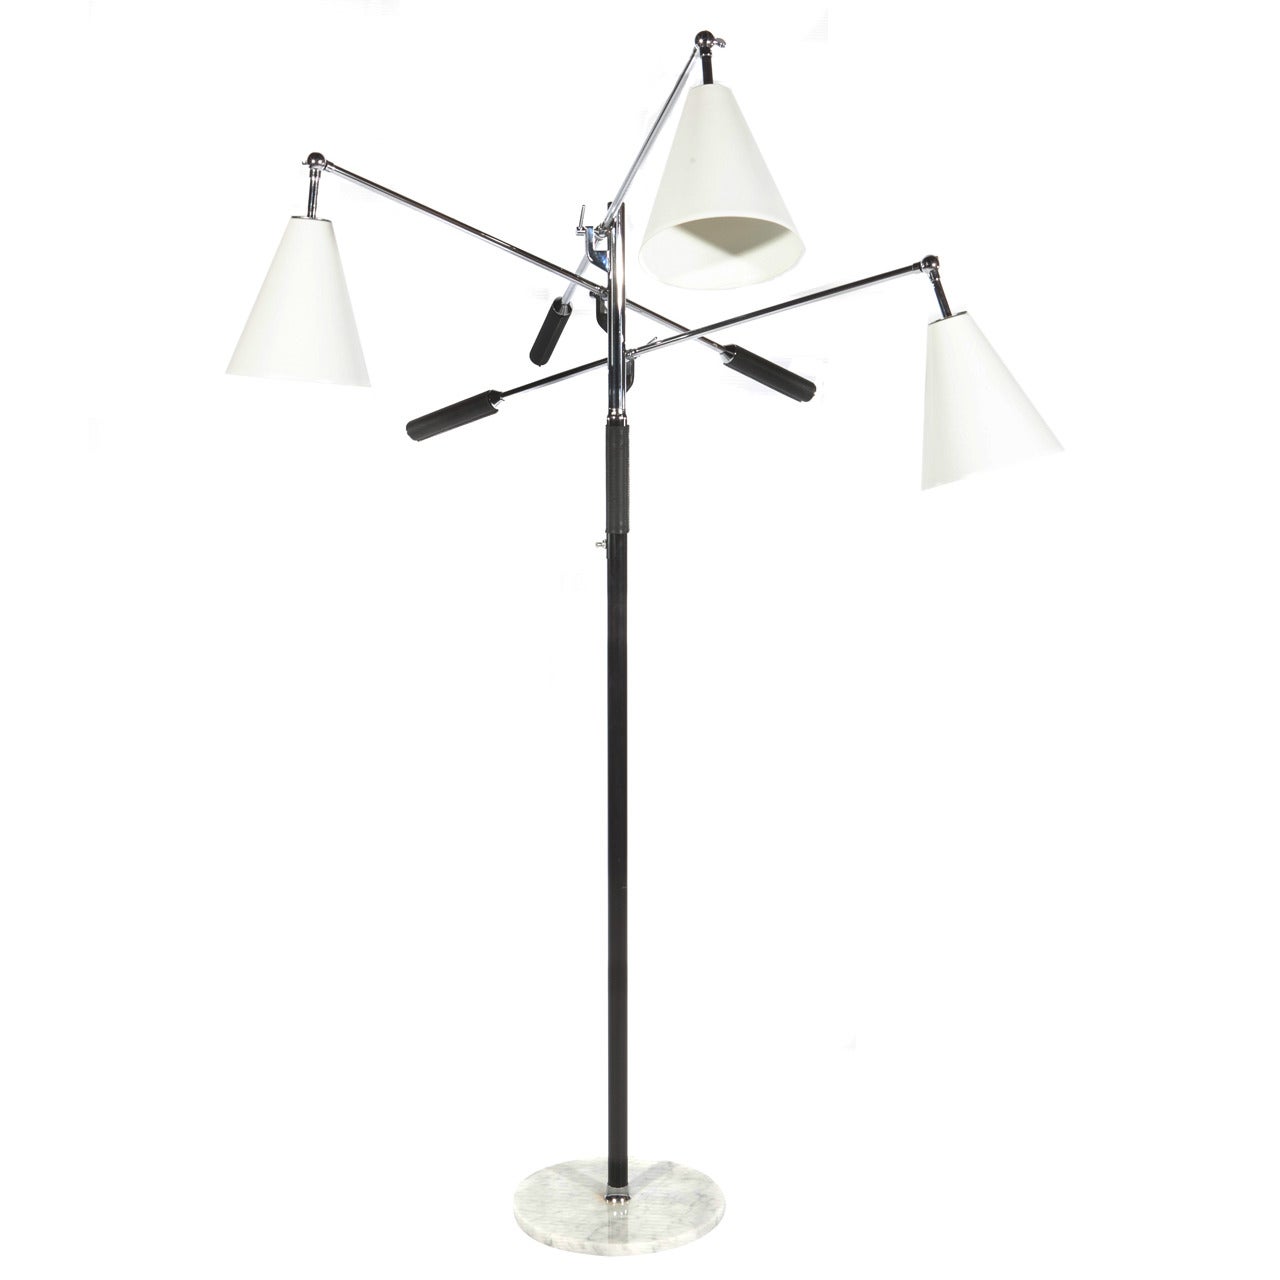 1960s Italian Triennale Style Floor Lamp